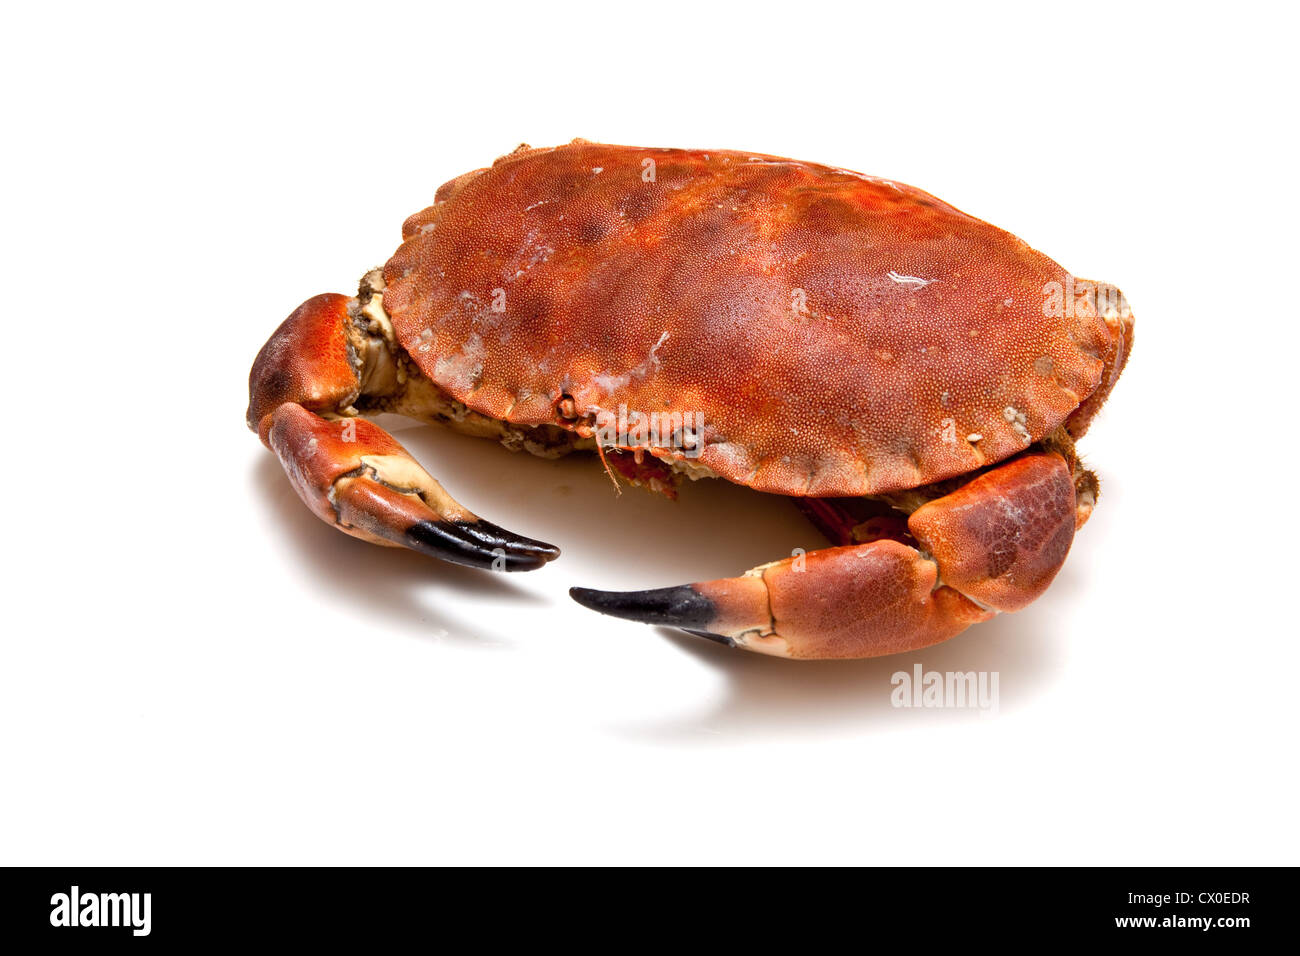 De crabe cuite brun comestibles les îles Orkney, isolated on a white background studio. Banque D'Images